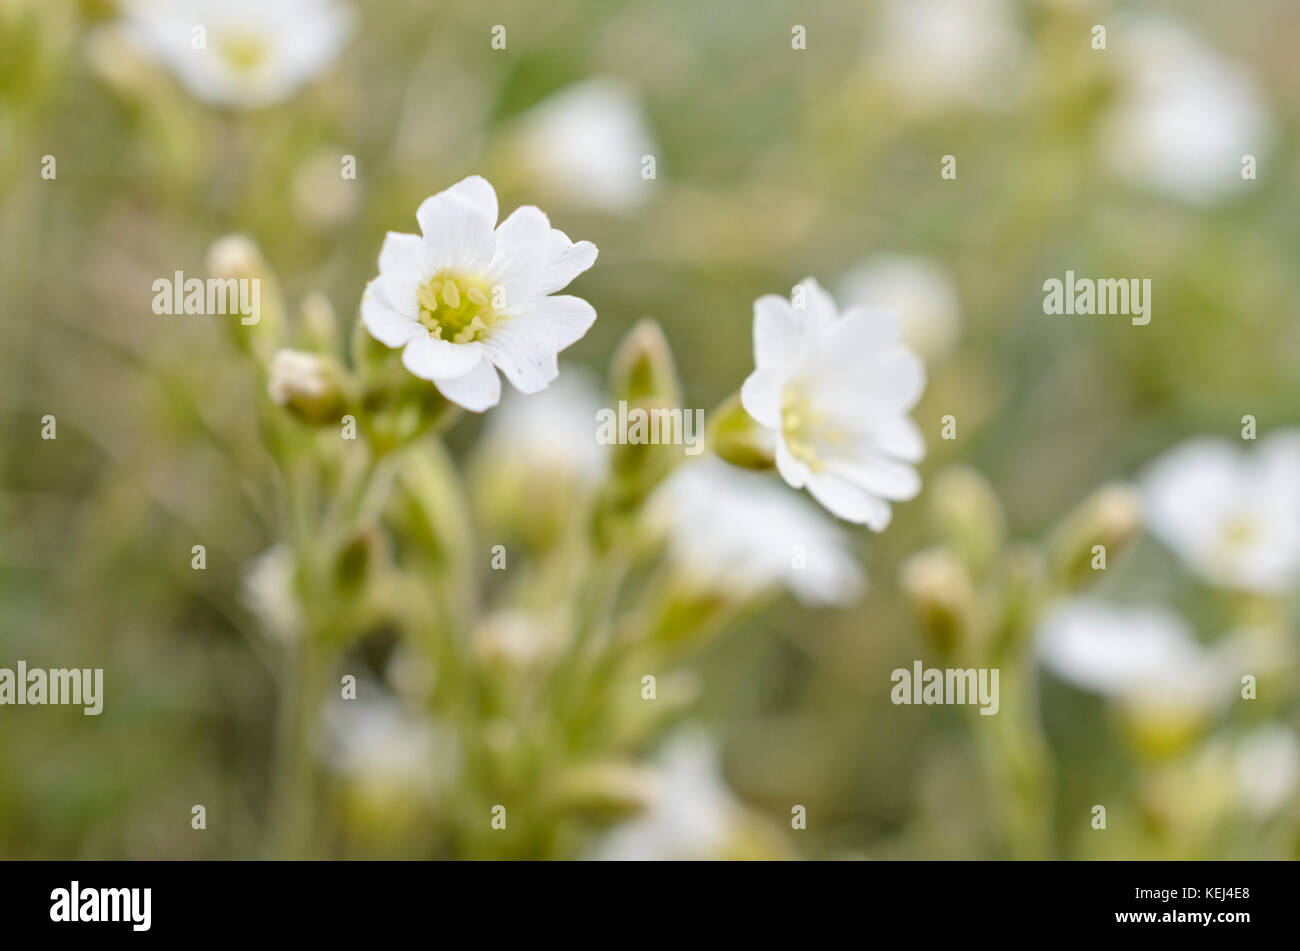 Field chickweed (Cerastium arvense) Stock Photo